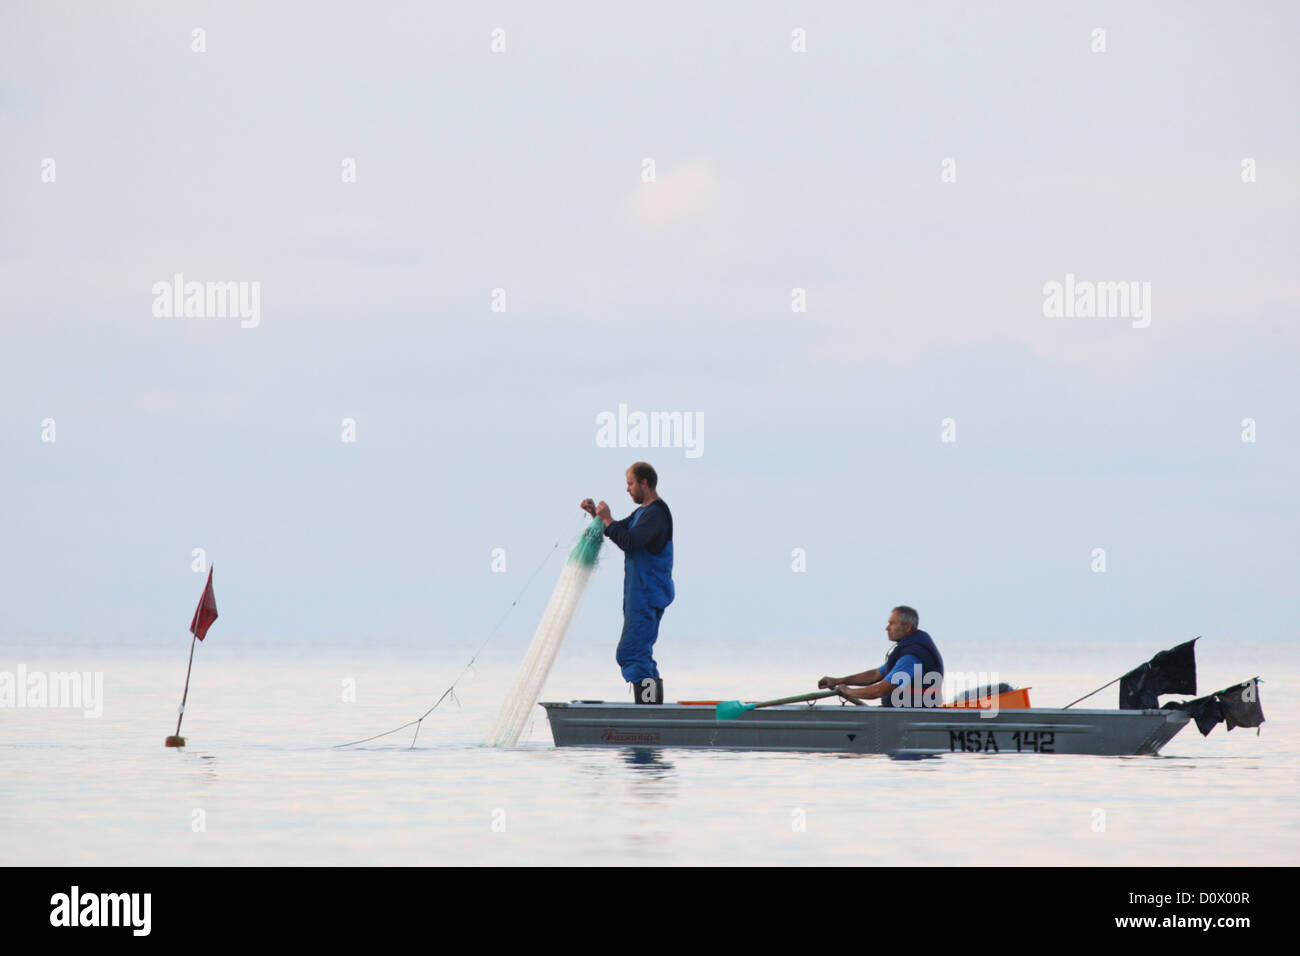 https://c8.alamy.com/comp/D0X00R/man-fishing-at-baltic-sea-estonia-europe-D0X00R.jpg